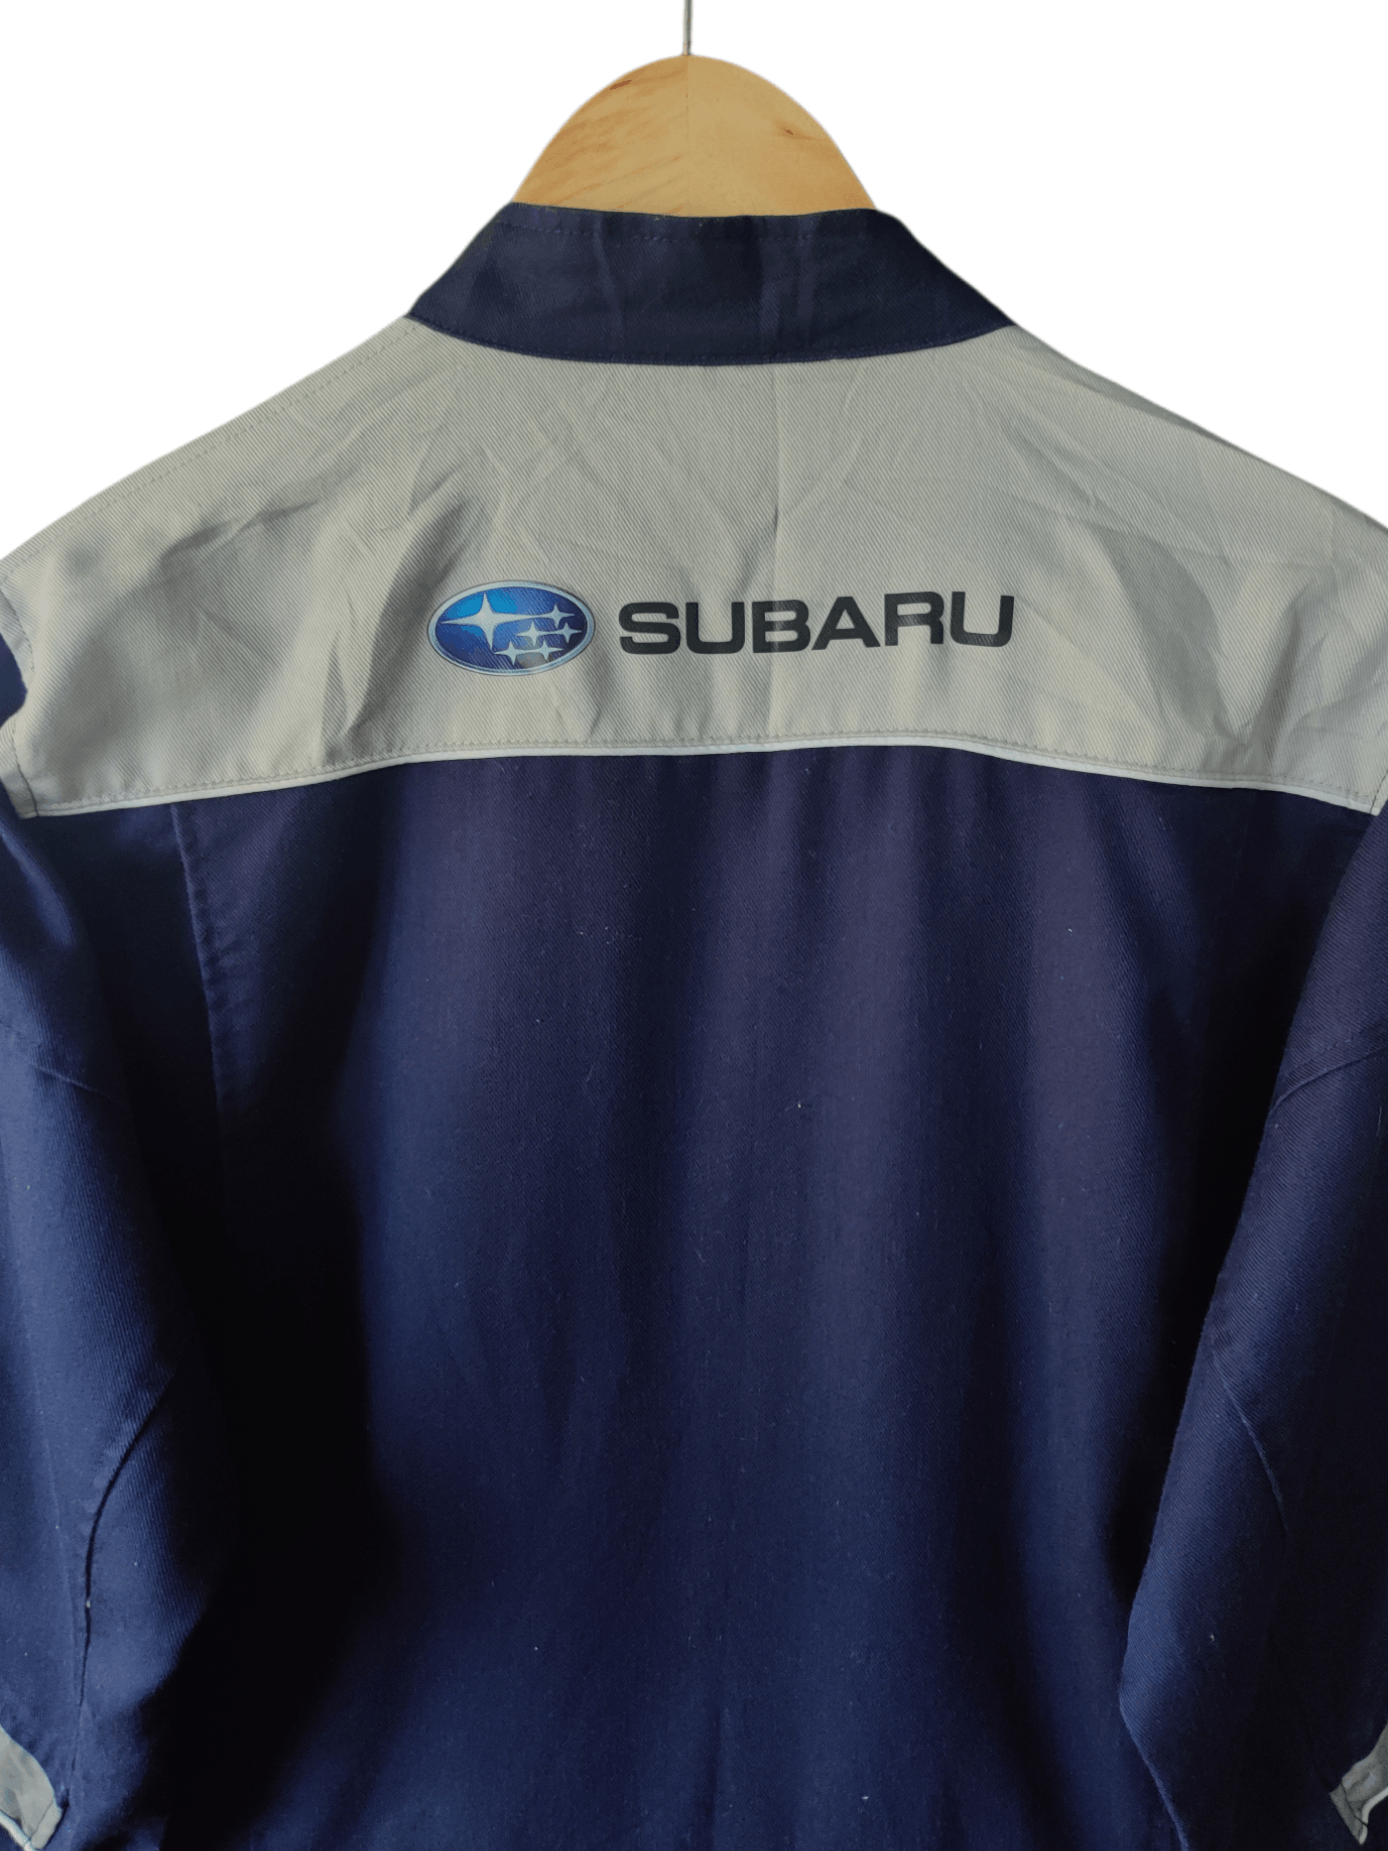 Sports Specialties - Vintage Subaru Racing Coverall Suit - 2